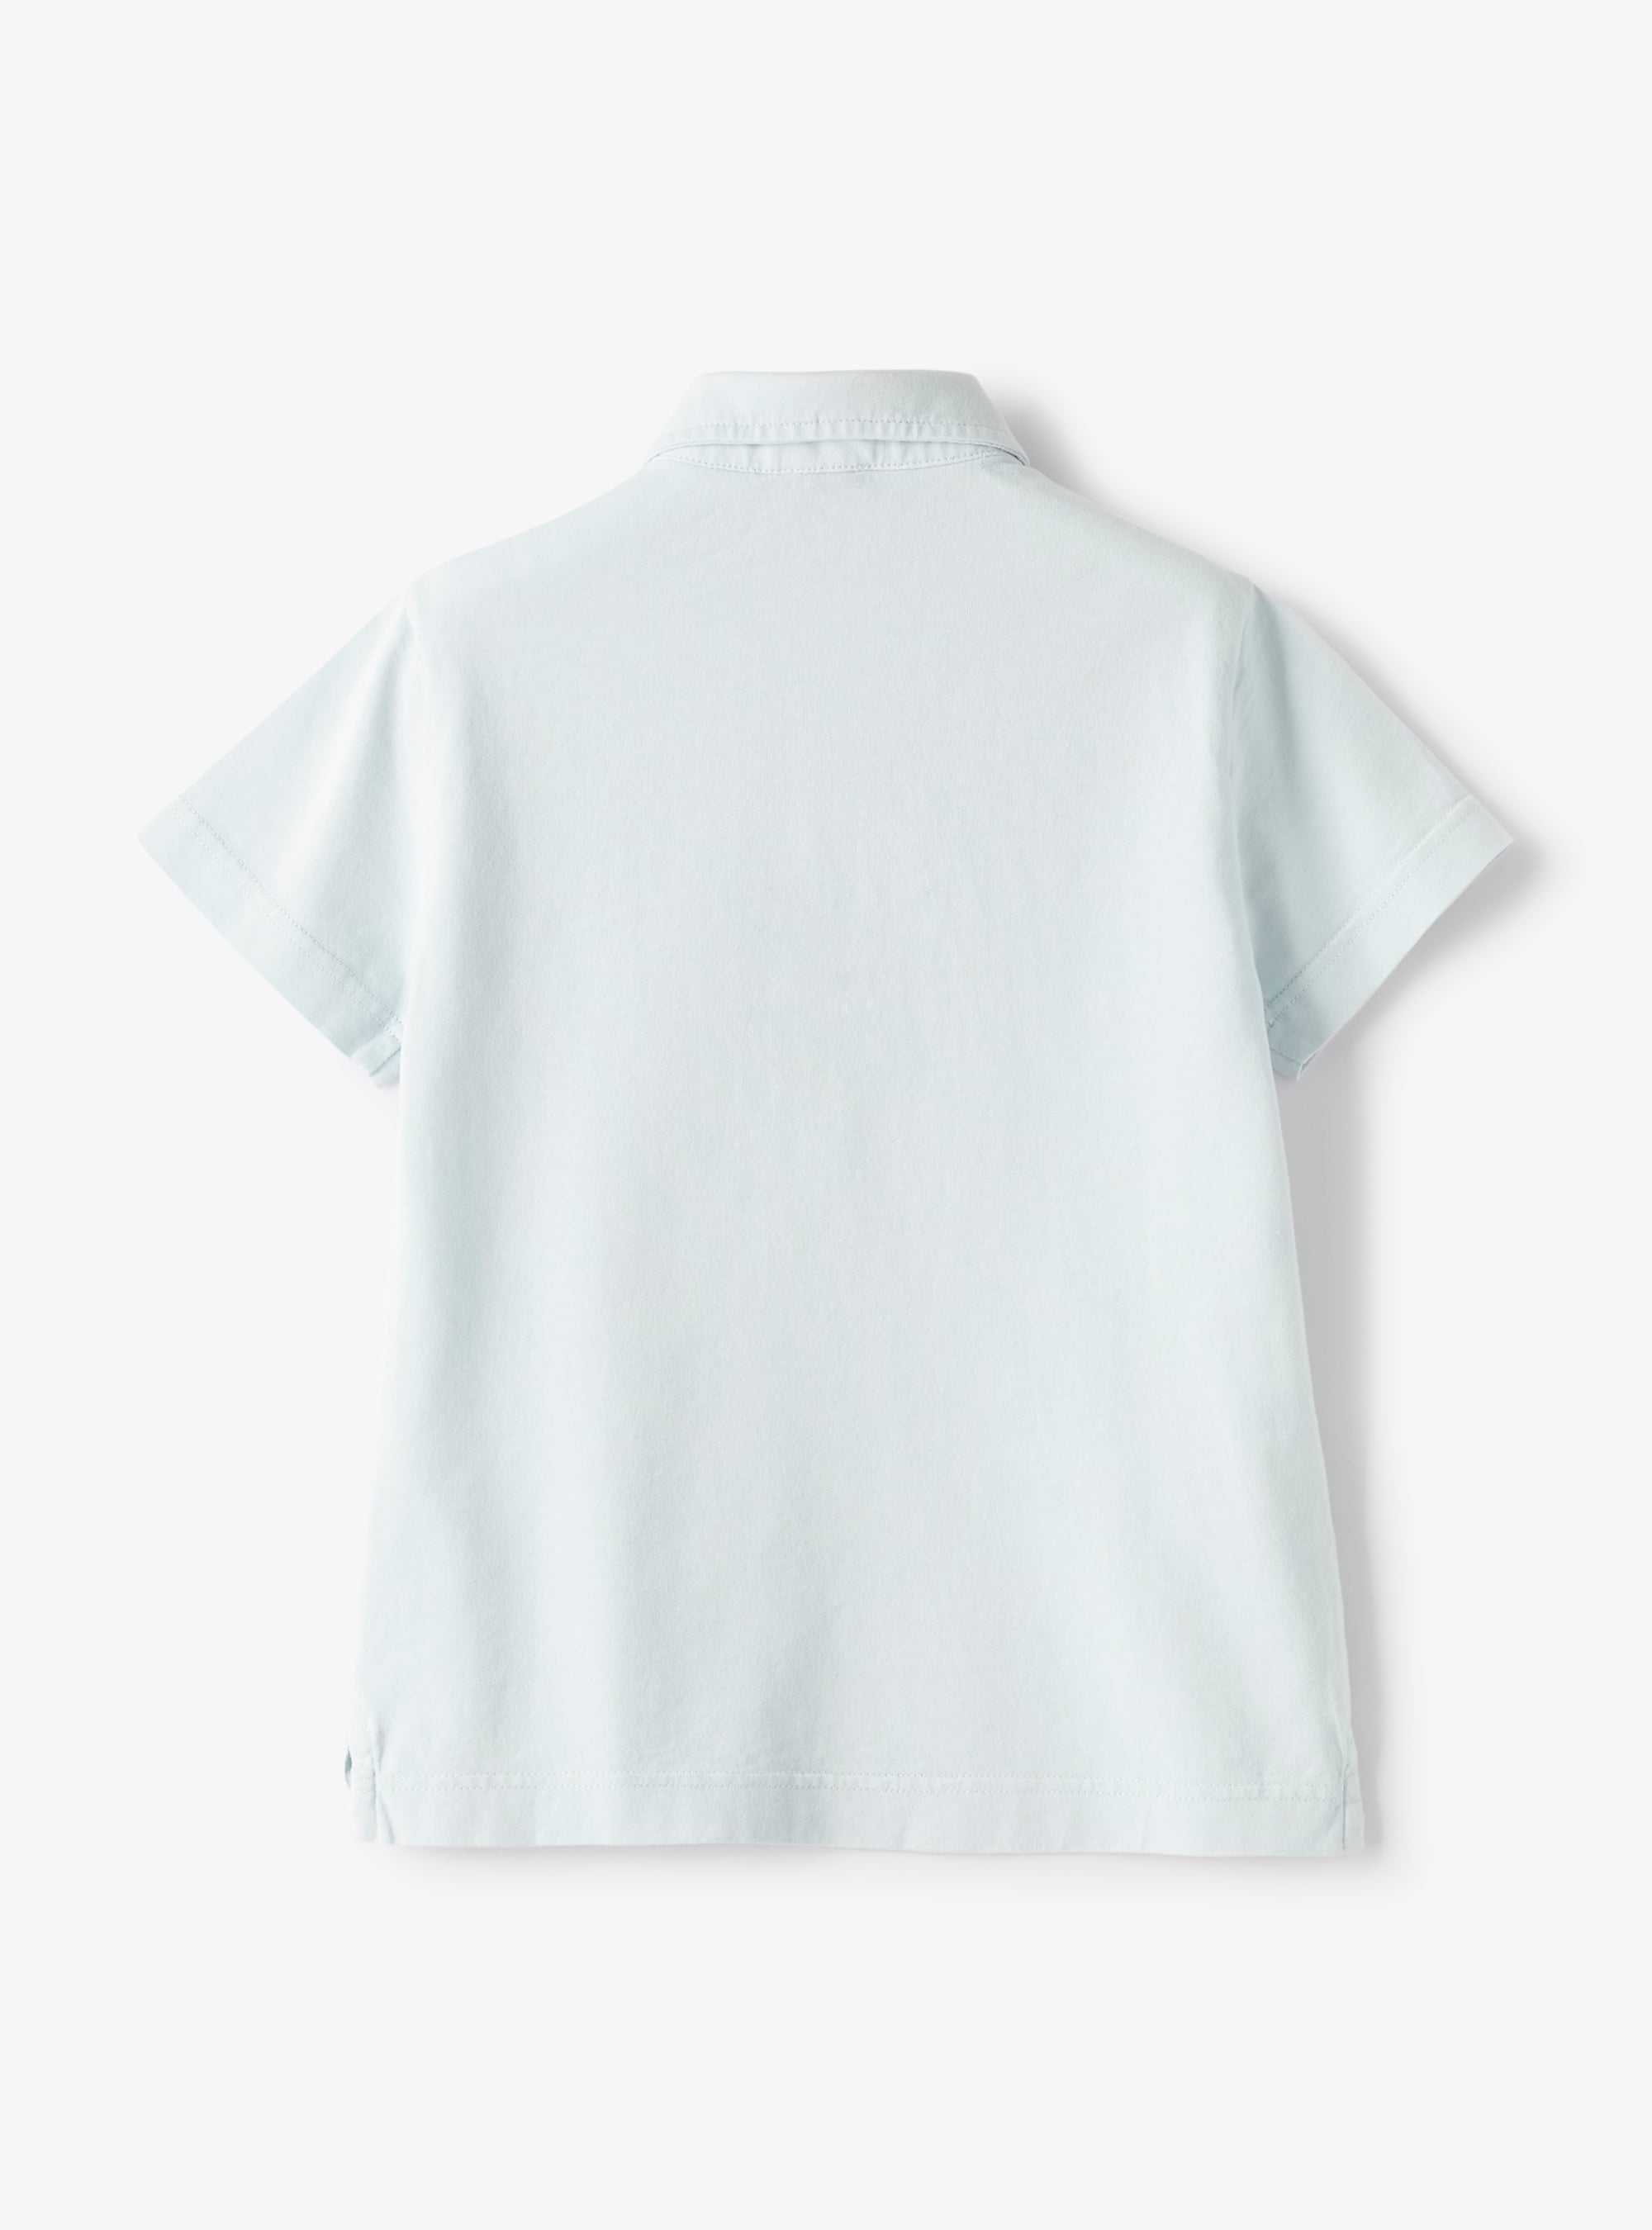 Organic cotton polo shirt - Light blue | Il Gufo